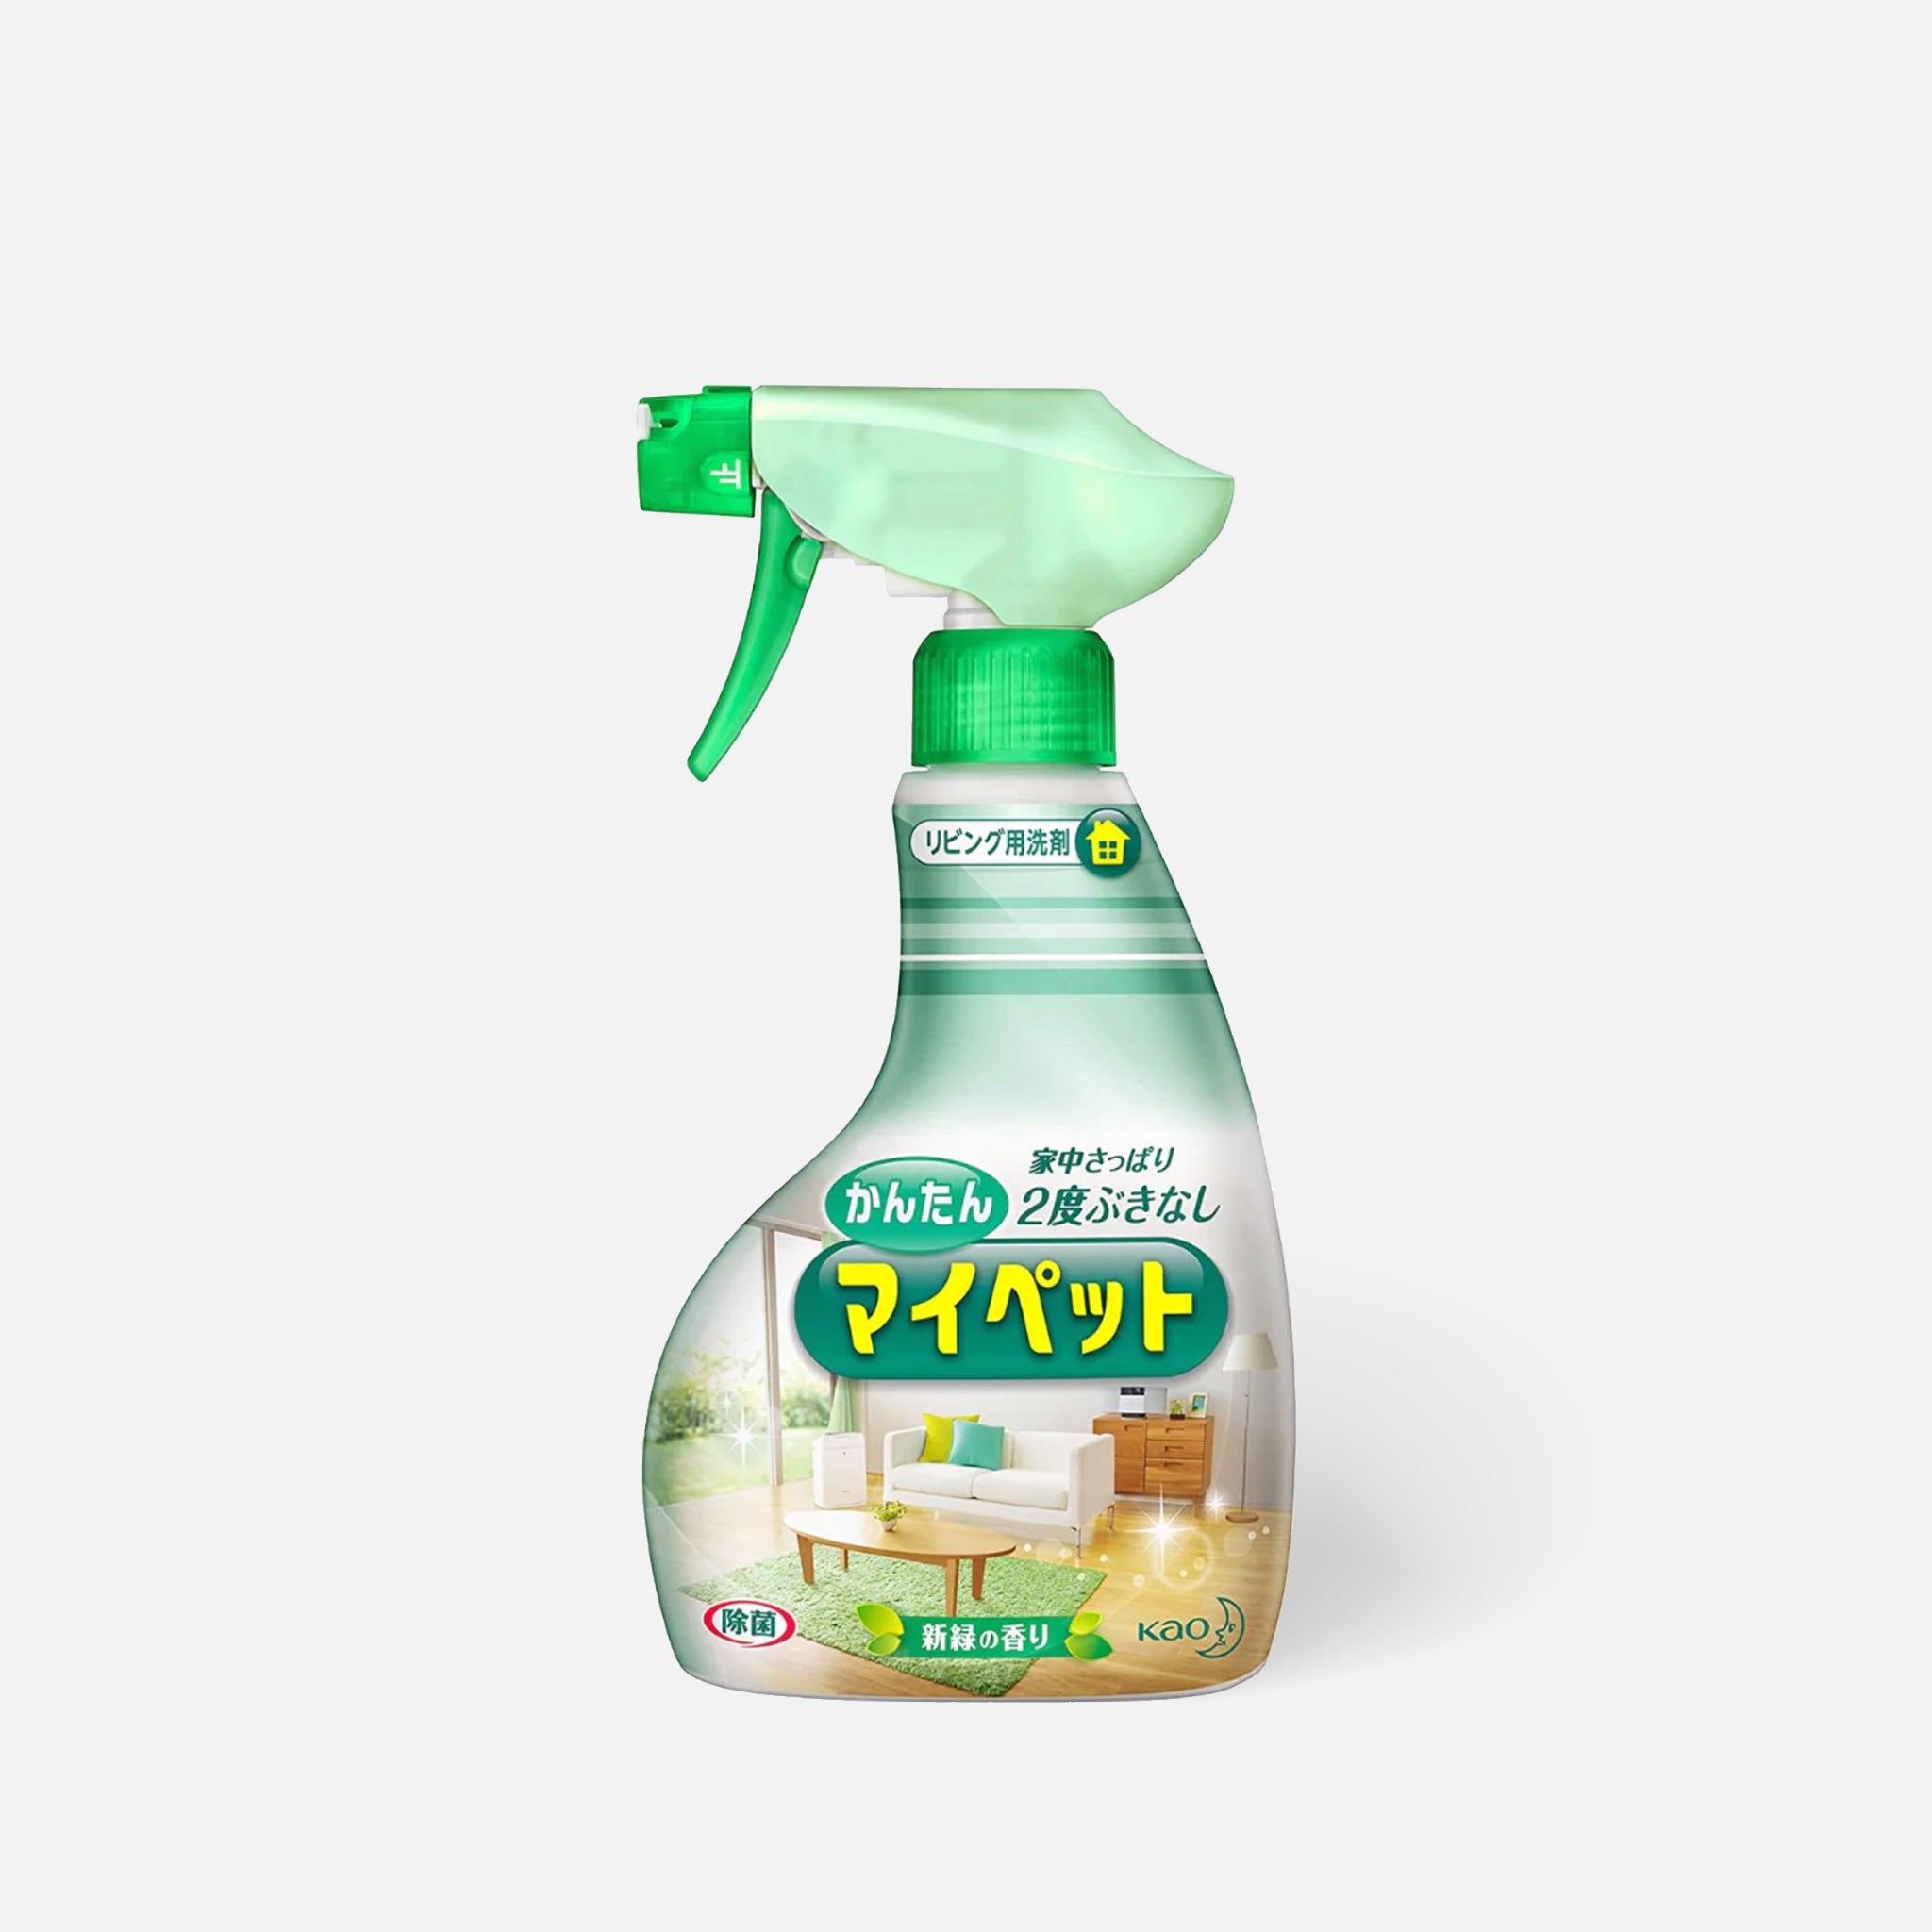 KAO Household Multi-Purpose Detergent Fresh Green Scent 400ml